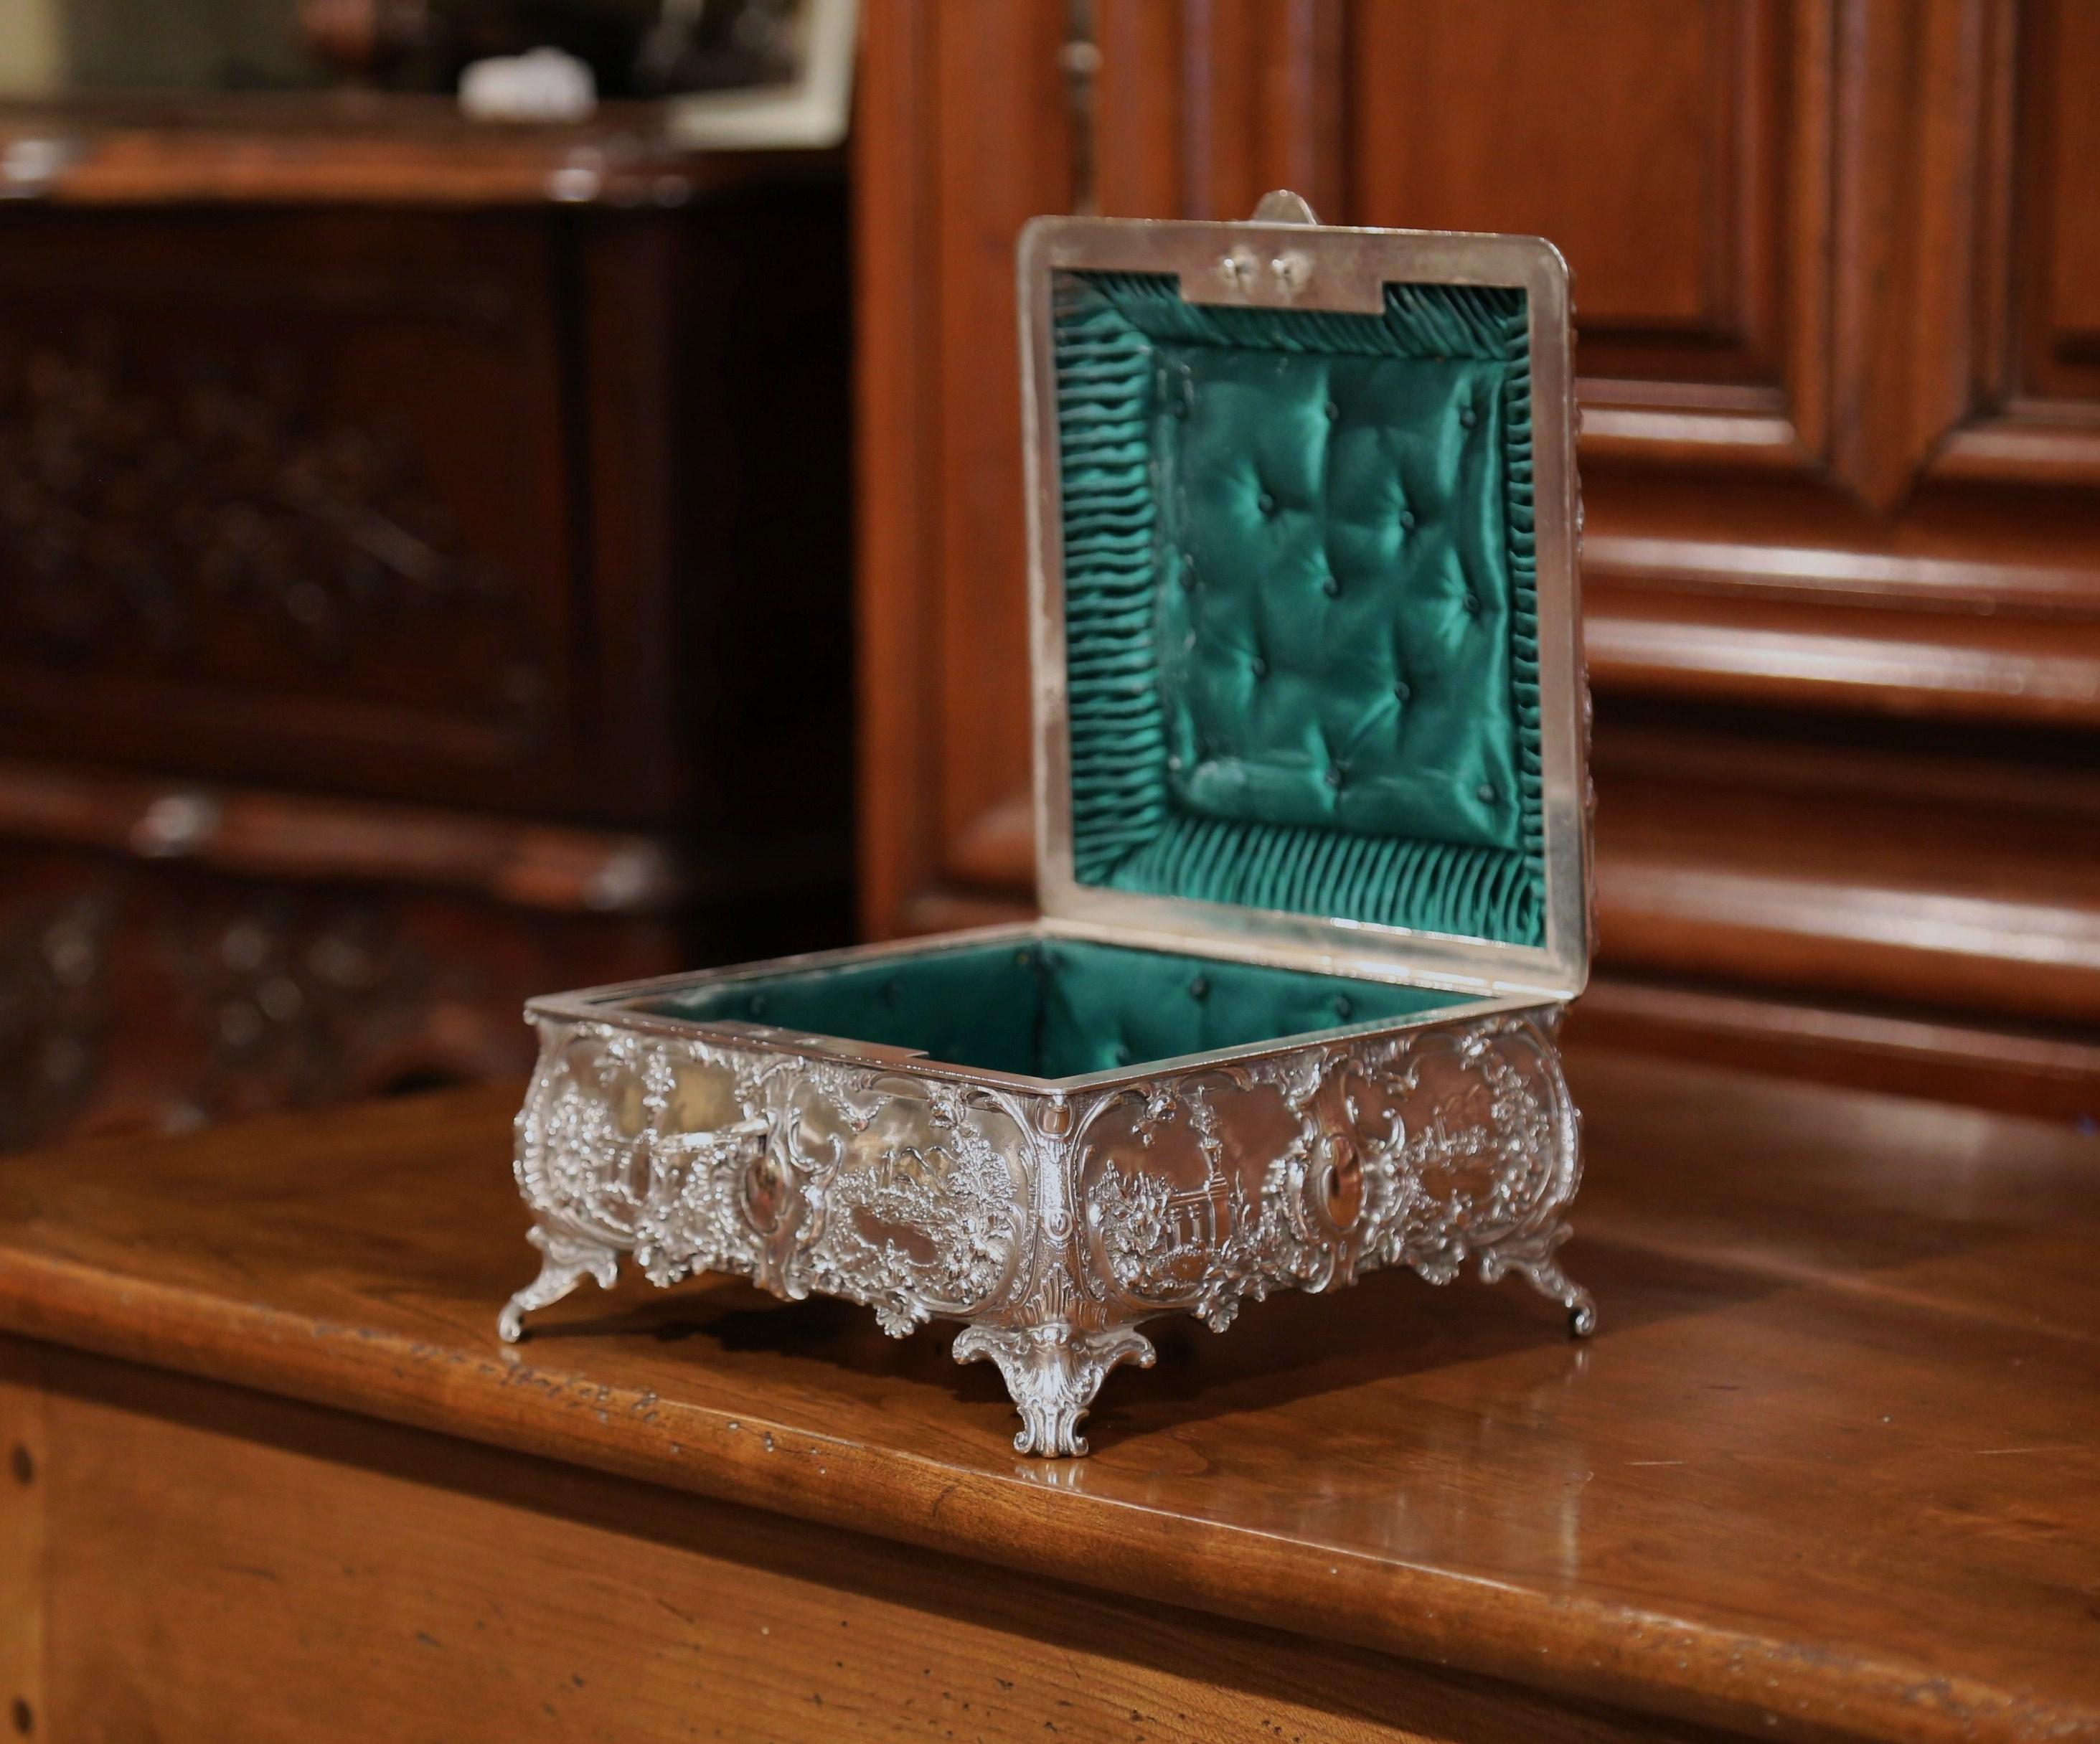 19th century antique jewelry box